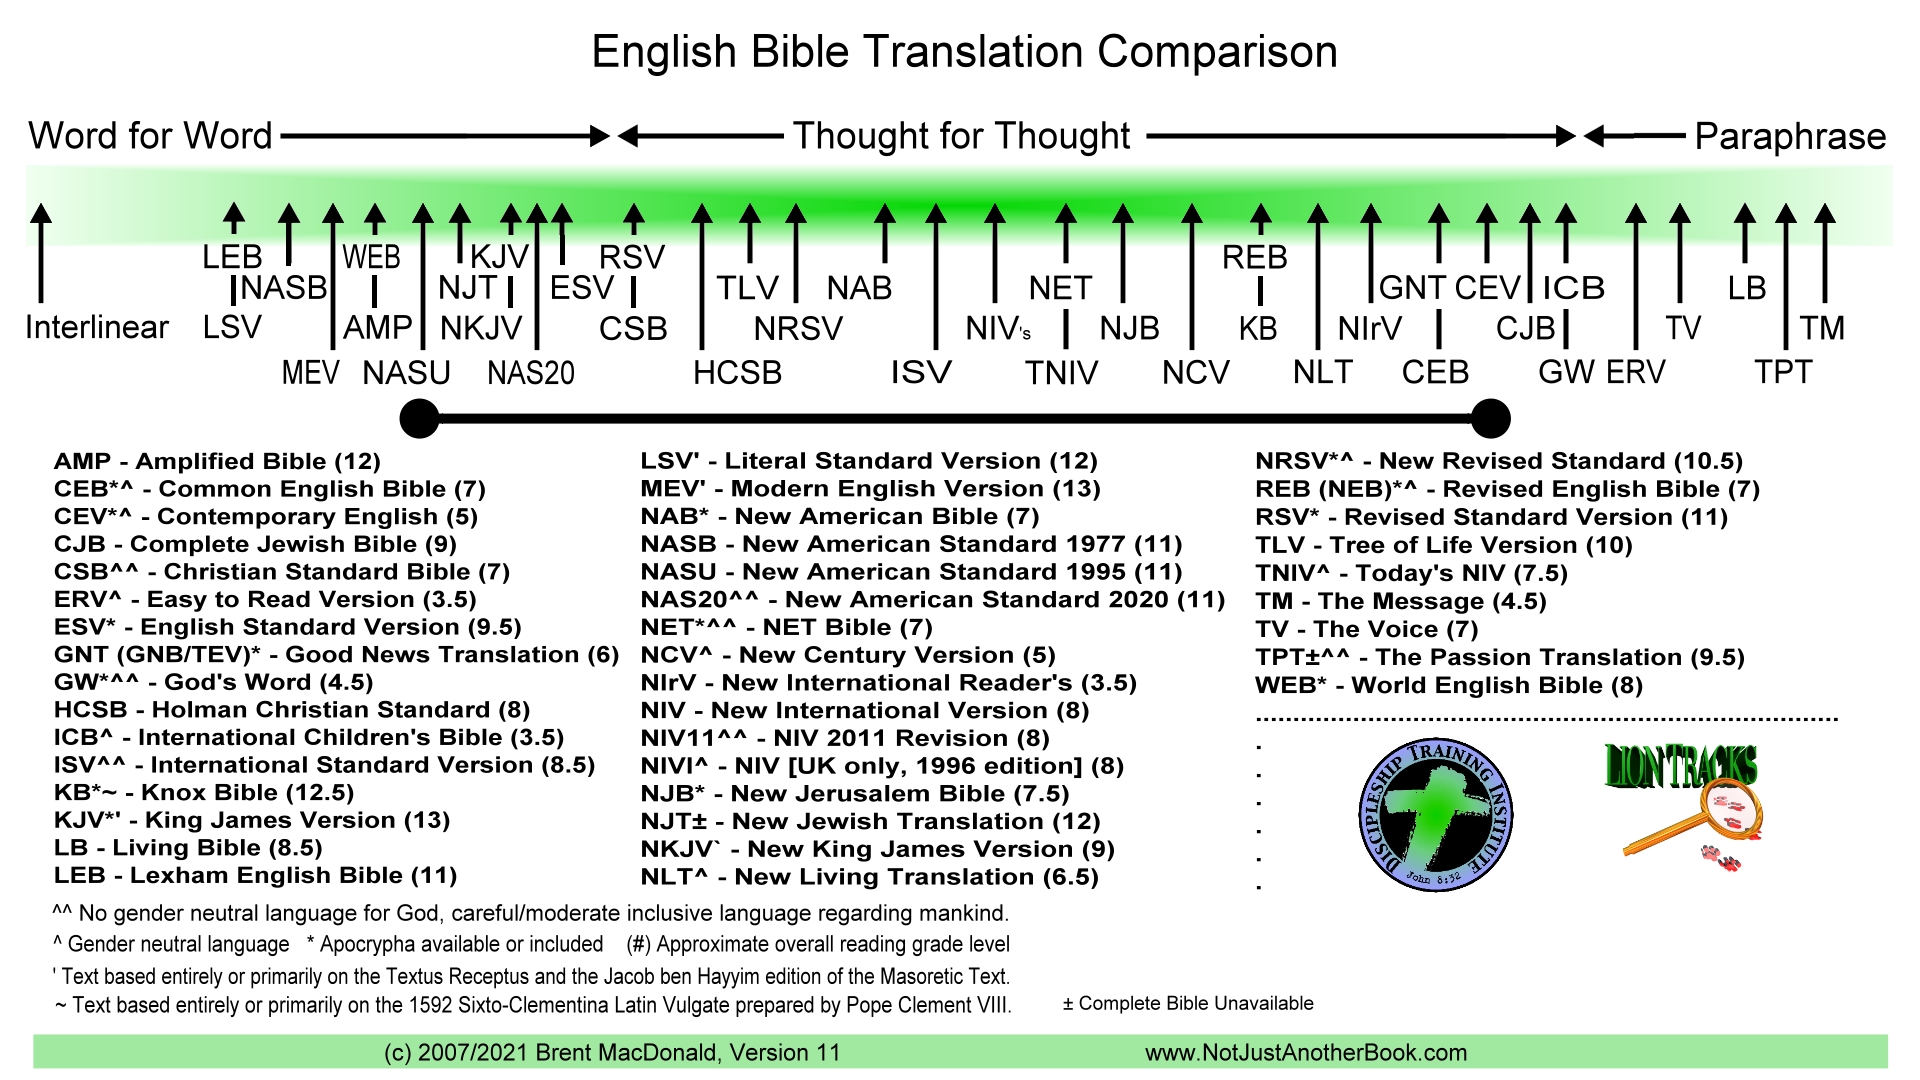 English Bible Translations Family Tree 